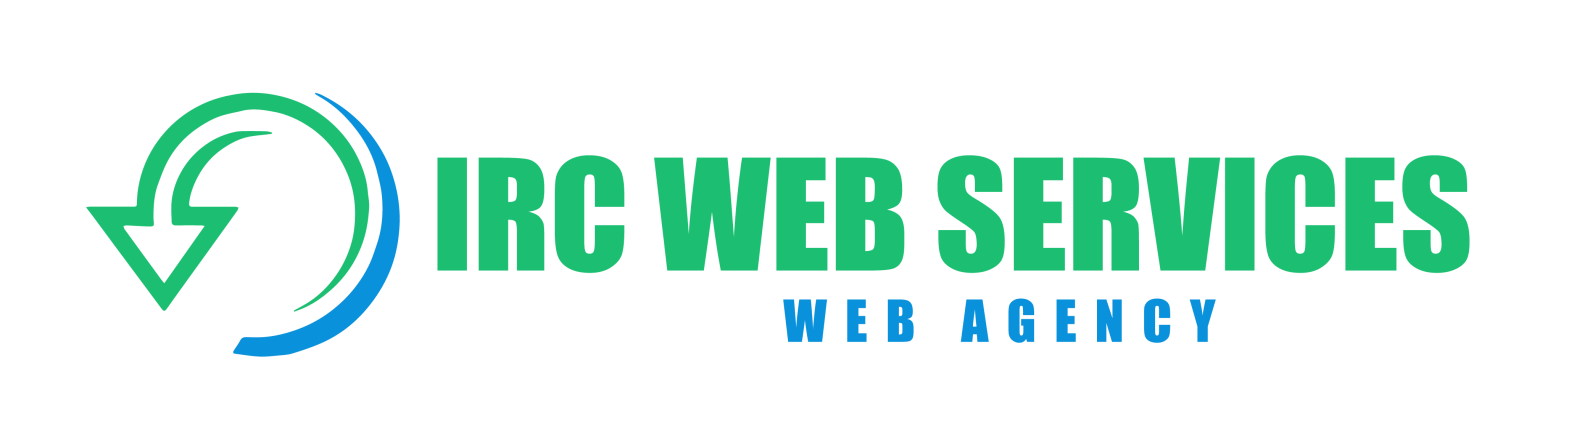 IRC Web Services Web Agency